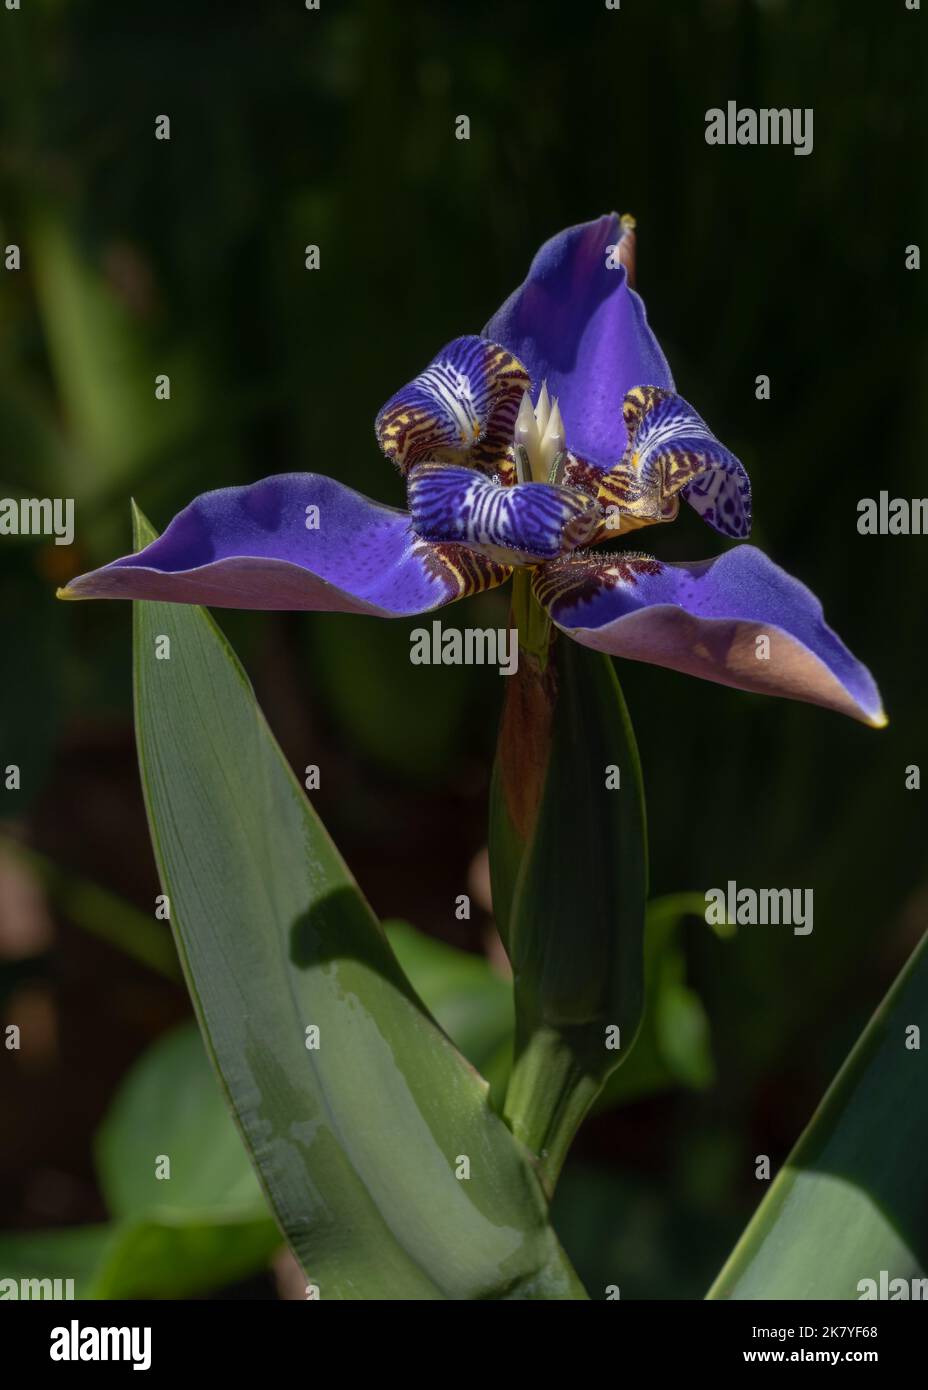 Closeup view of bright purple blue walking iris neomarica caerulea flower blooming outdoors on natural dark background Stock Photo